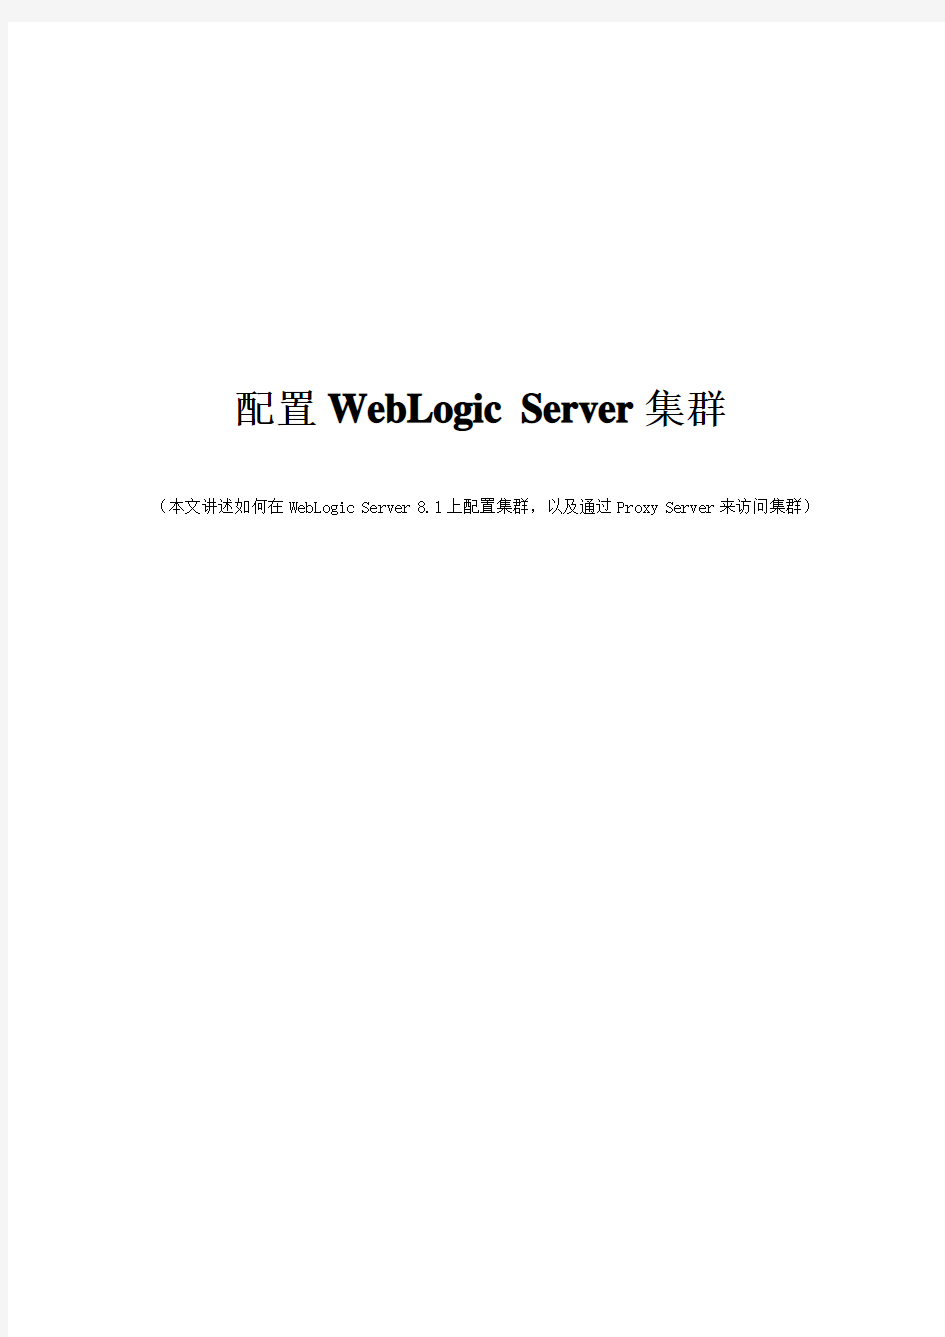 windows 配置WebLogic Server集群(增加版)